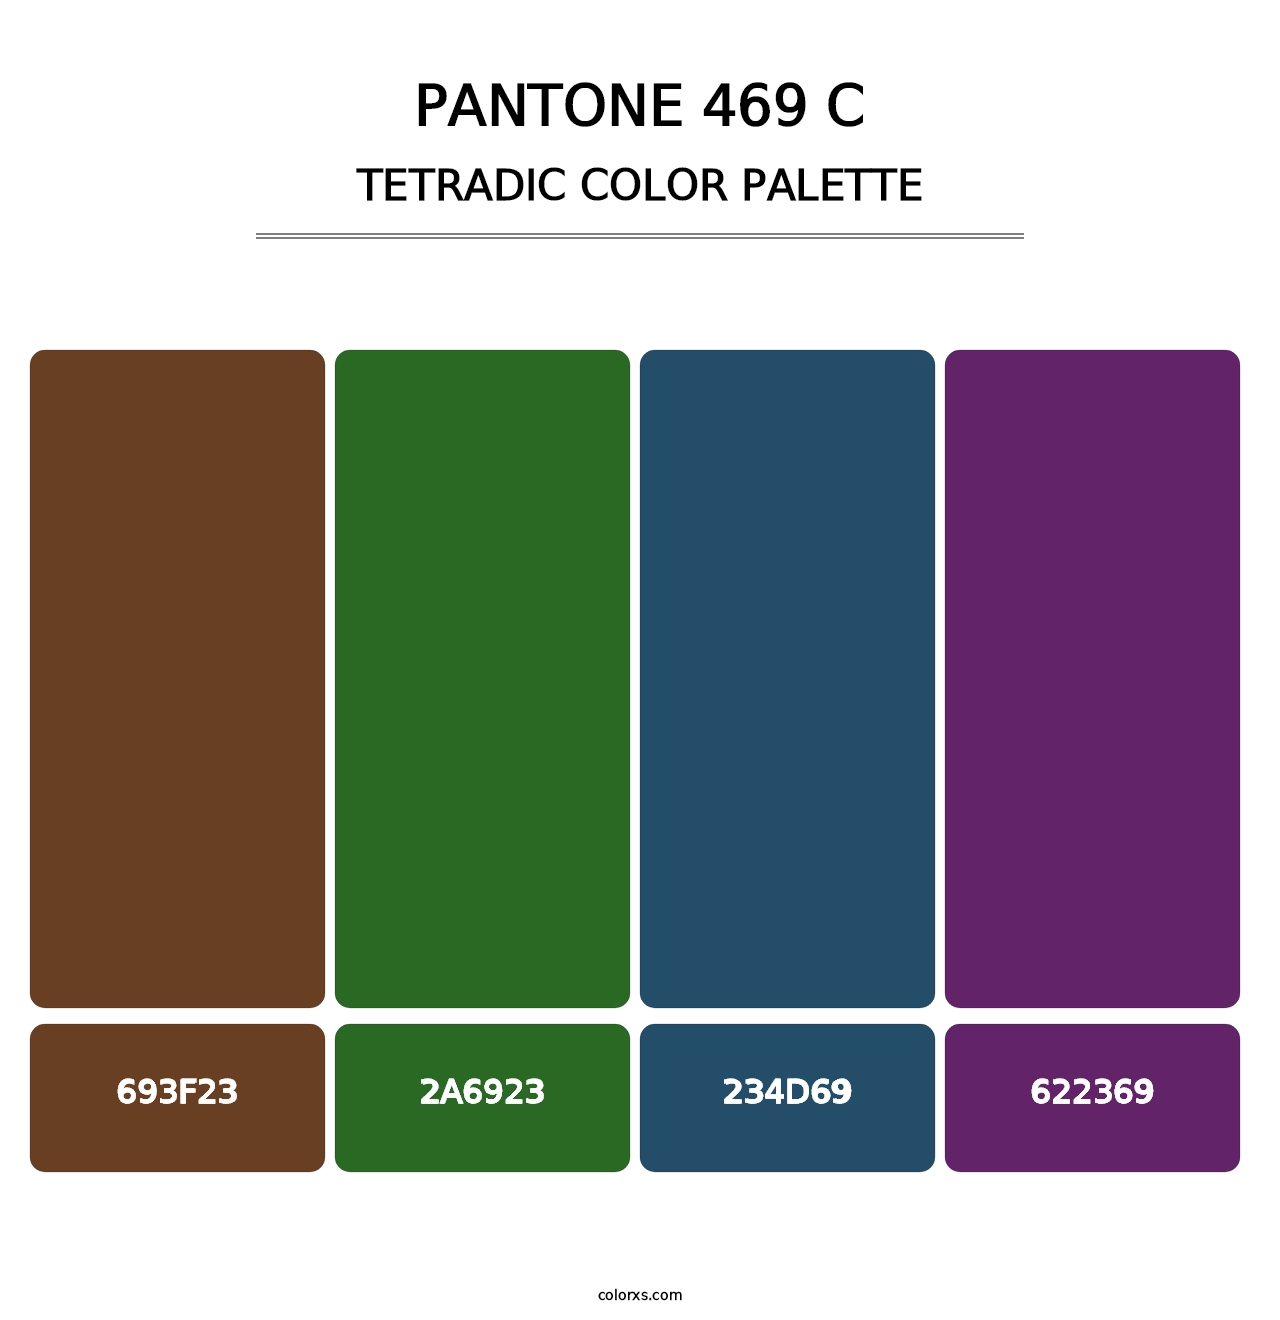 PANTONE 469 C - Tetradic Color Palette